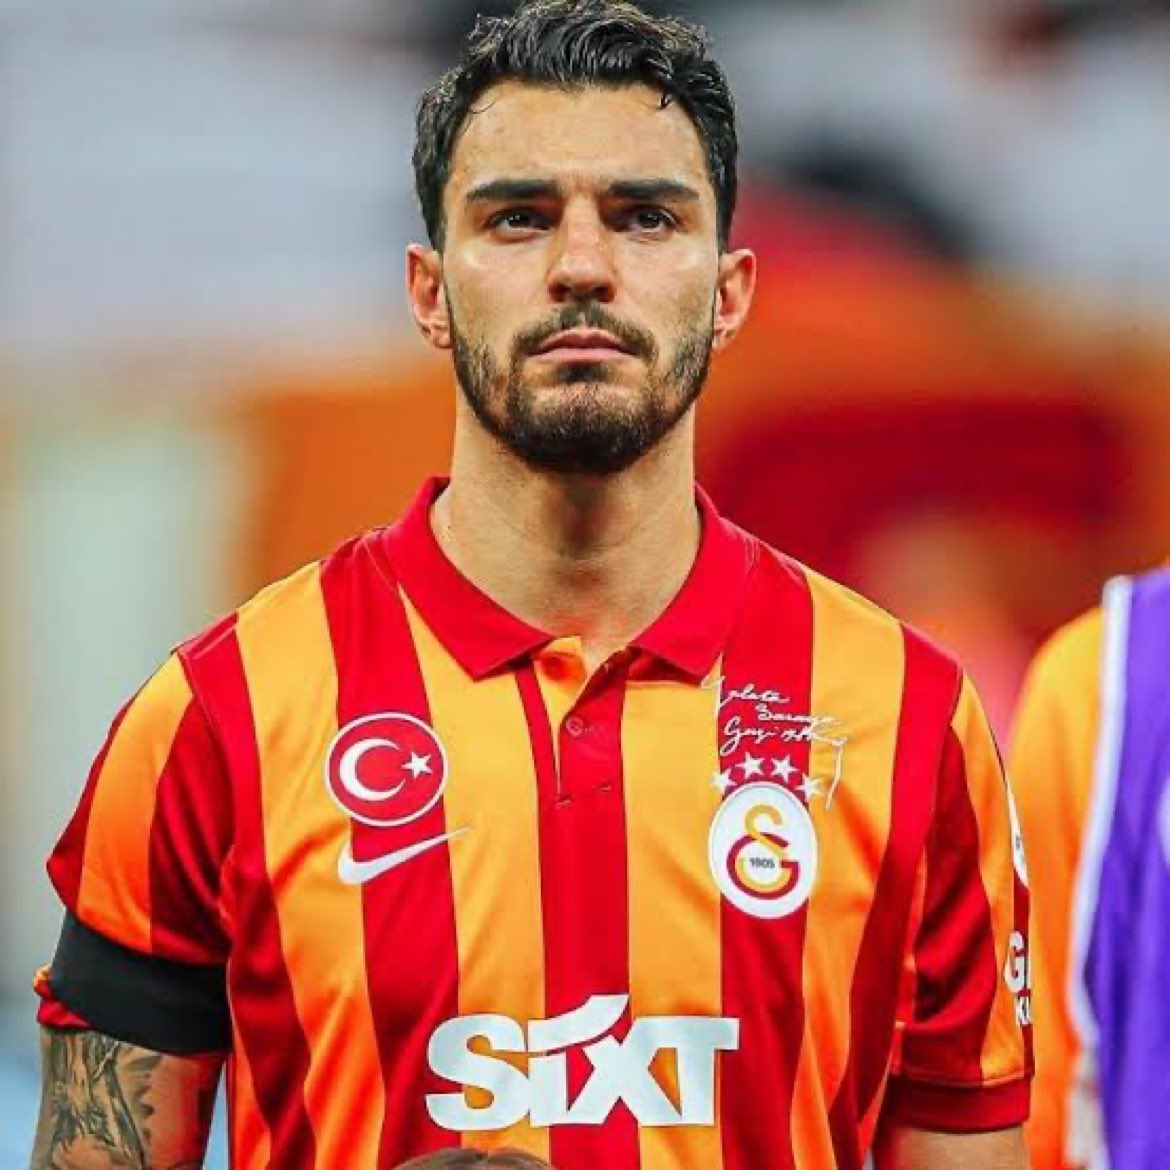 Fiorentina, Galatasaray'a Kaan Ayhan'ın fiyatını sordu.

[Calciomercato]